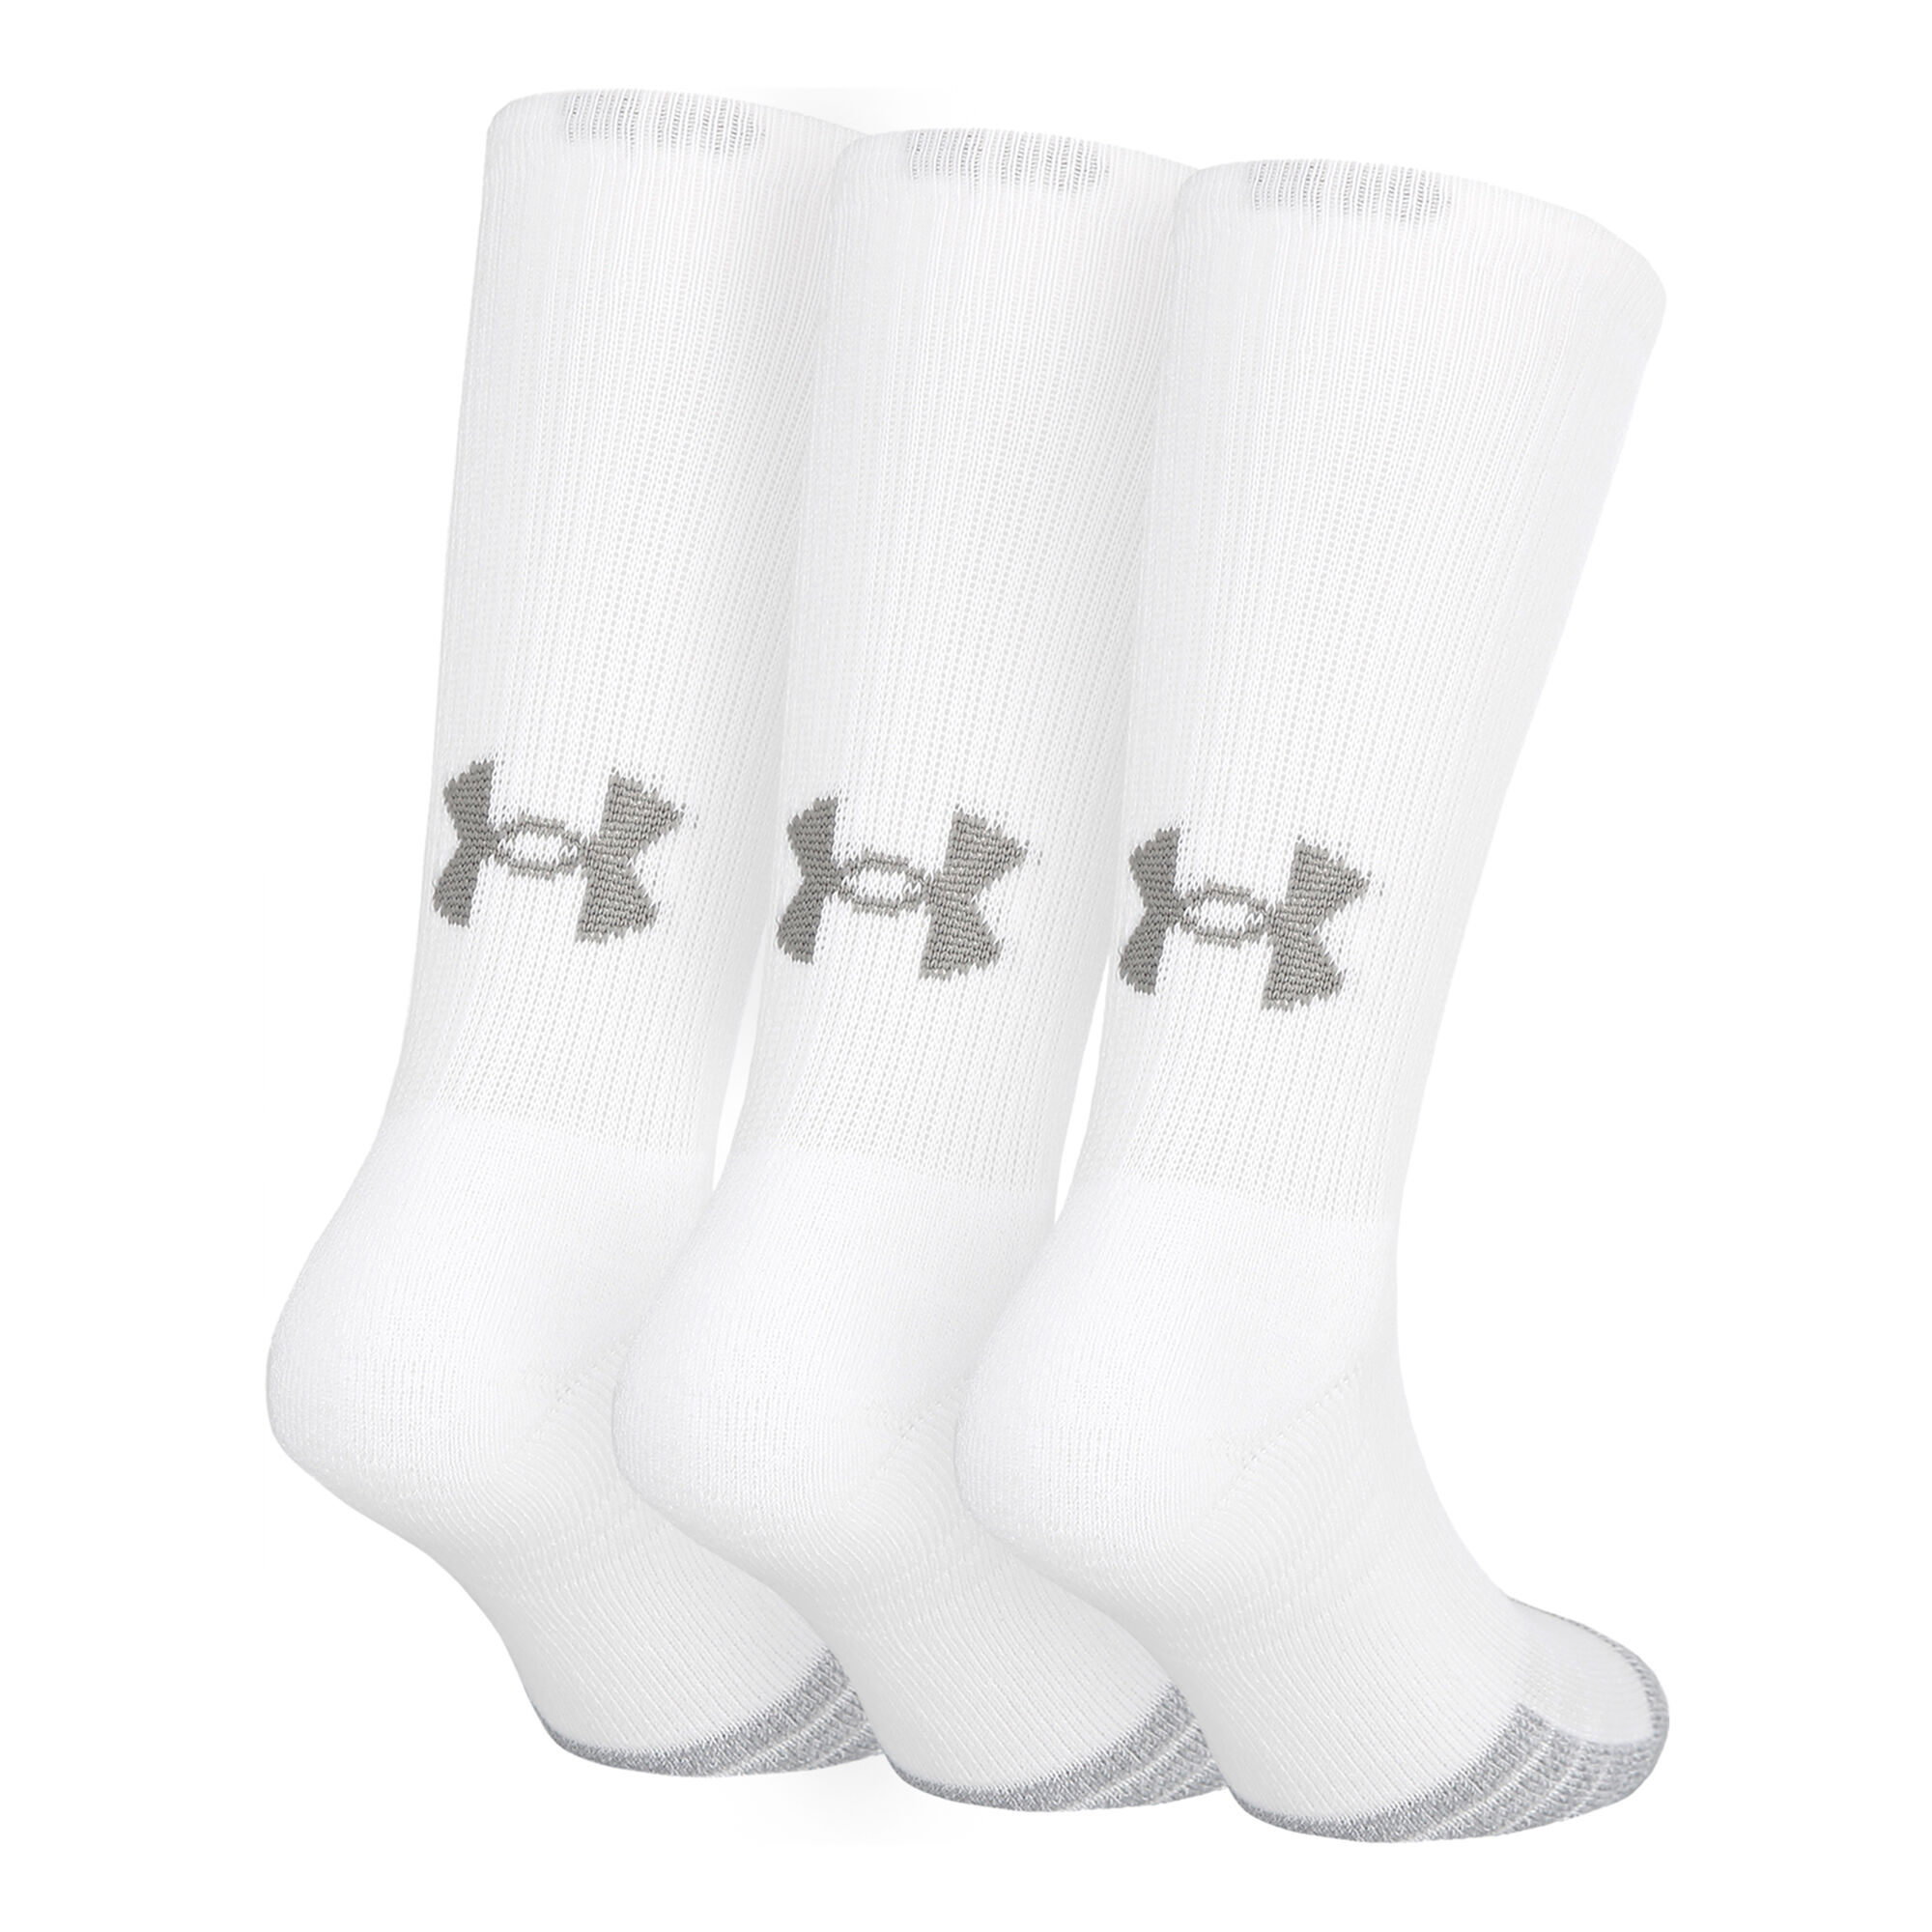 Heatgear Crew Sports Socks 3 Pack - White, Grey